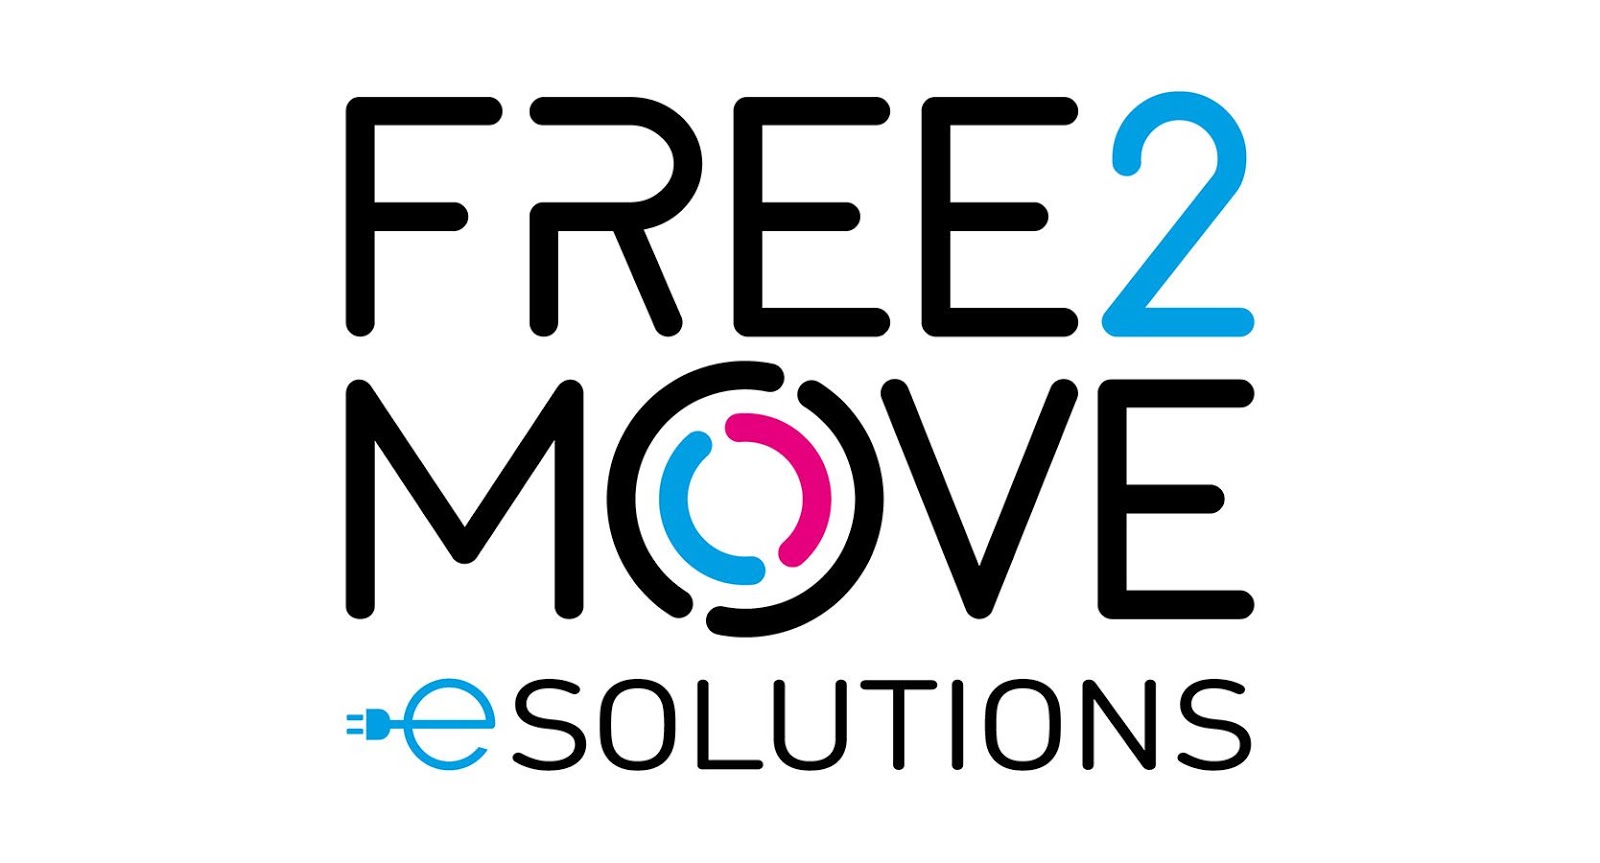 unnamed 2 Free2Move eSolutions : Stellantis & Engie EPS, δημιουργούν έναν παγκόσμιο ηγέτη e-mobility